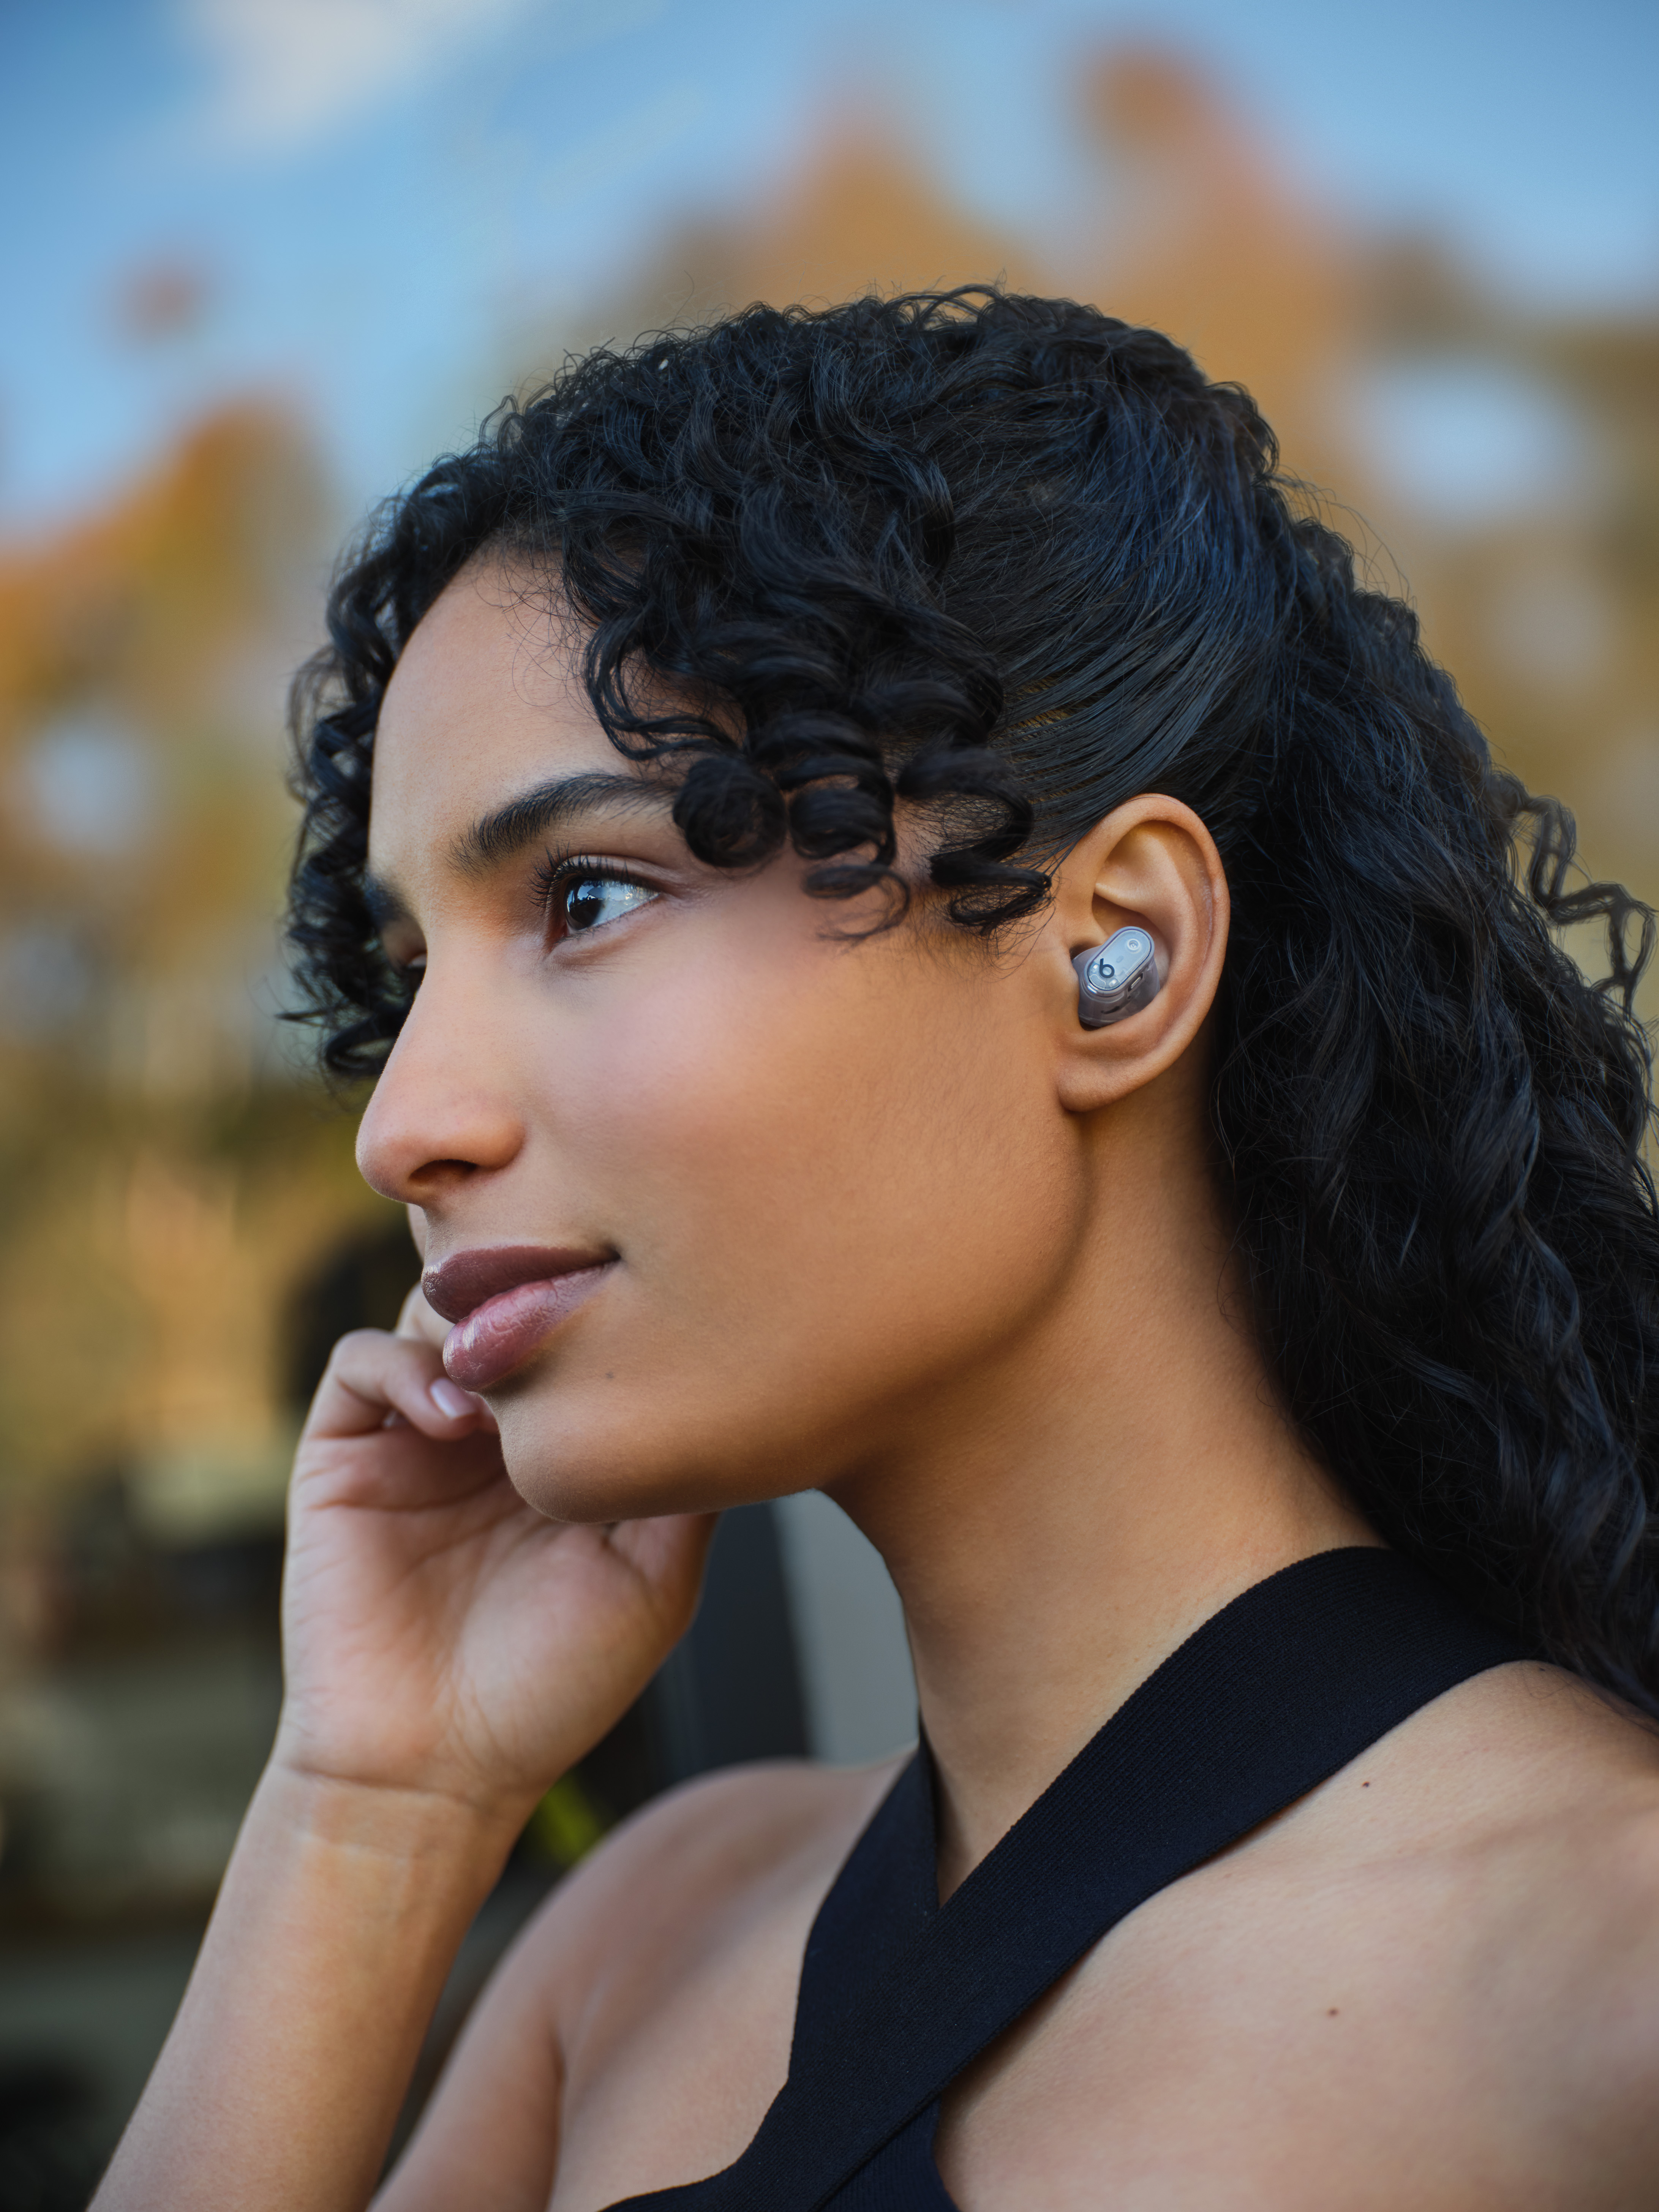 True Wireless, BEATS + Studio Bluetooth In-ear Kopfhörer Transparent Buds